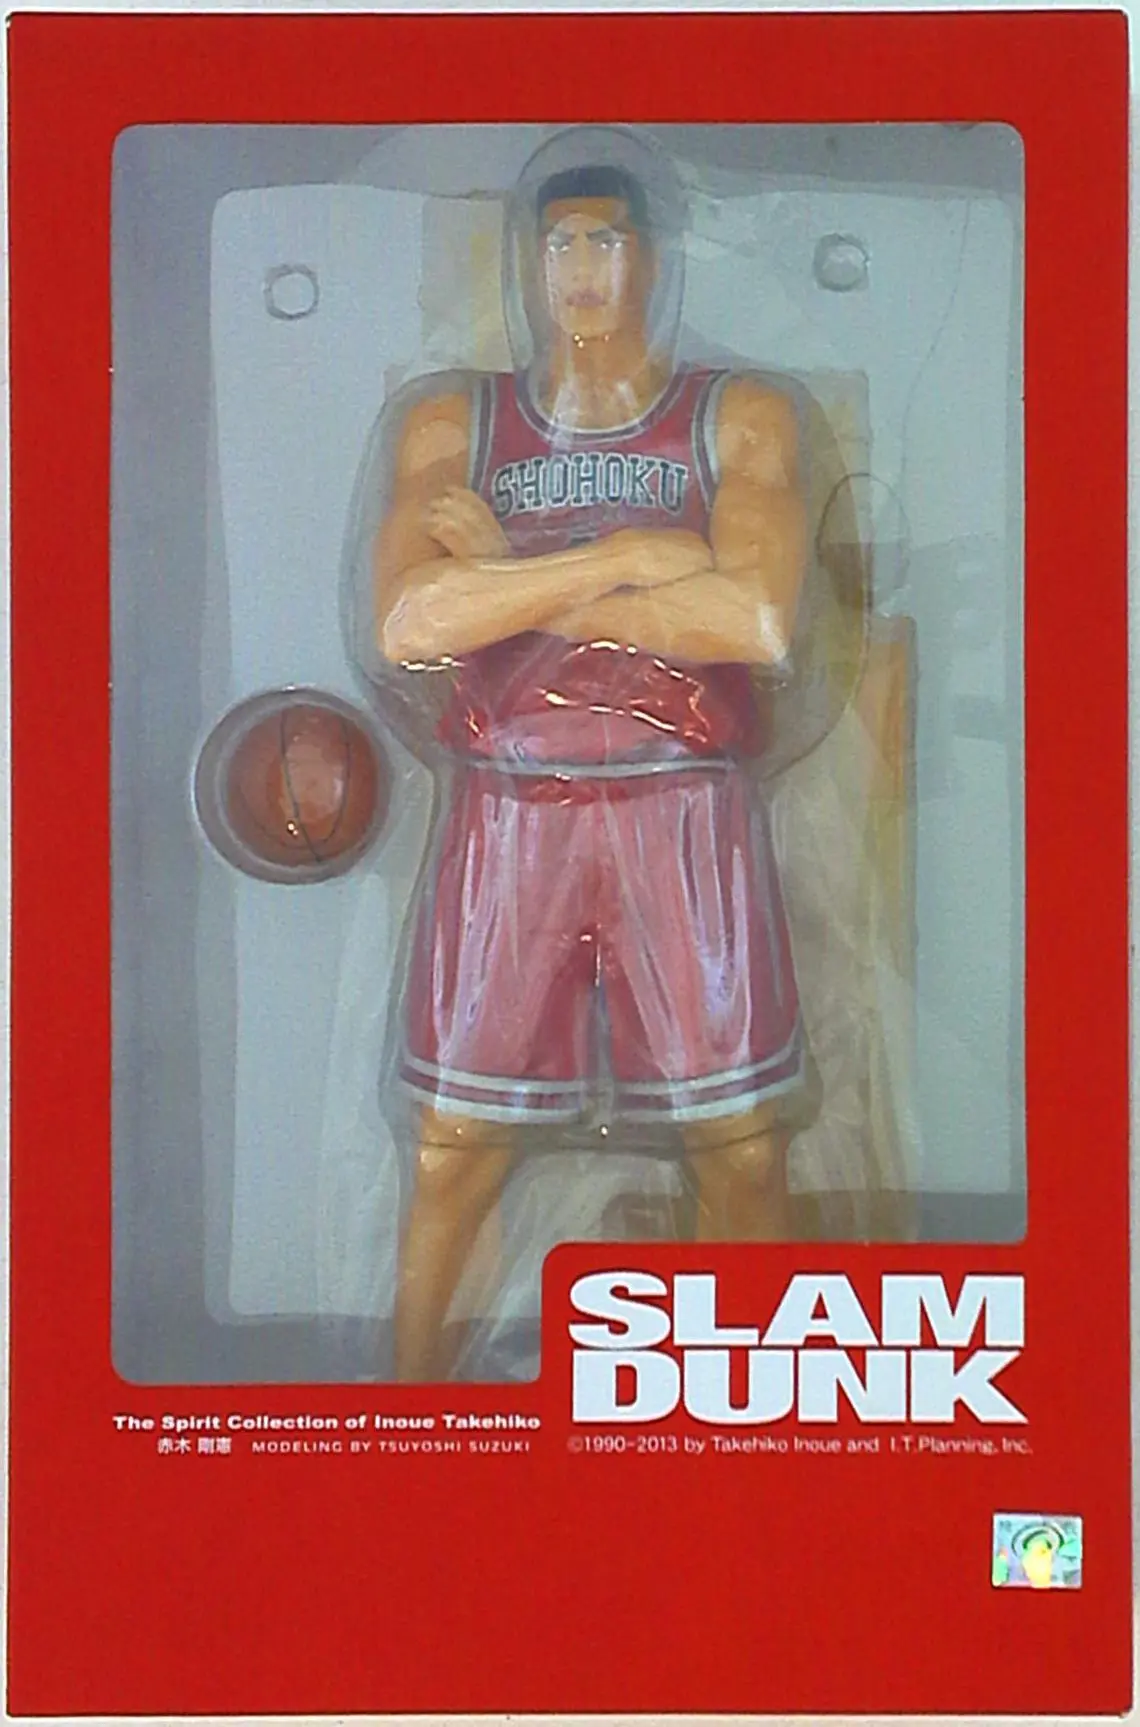 Figure - Slam Dunk / Akagi Takenori